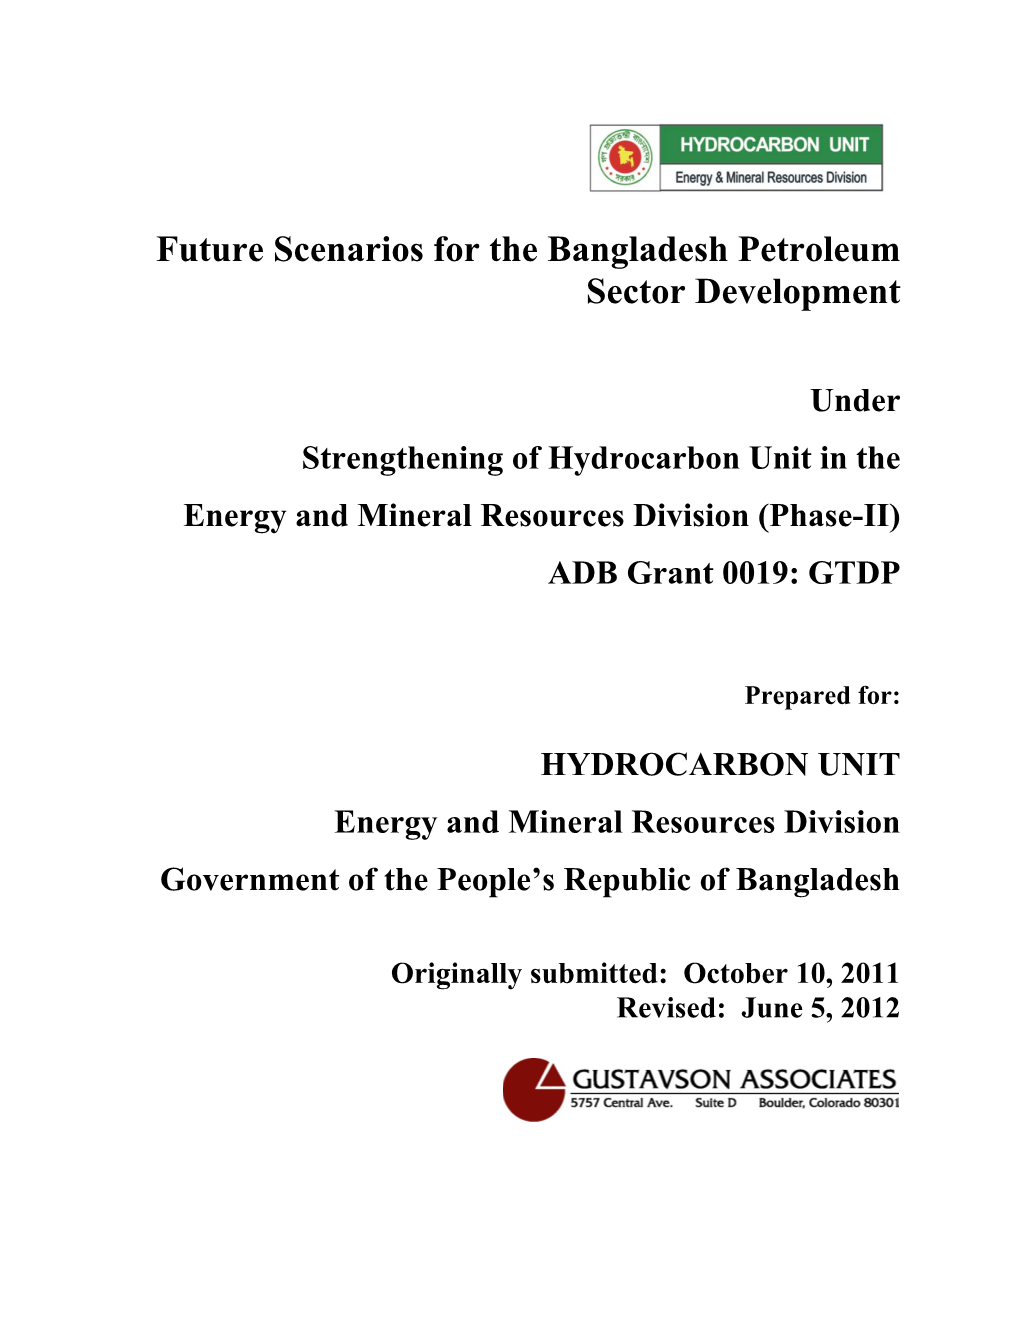 Future Scenarios for the Bangladesh Petroleum Sector Development